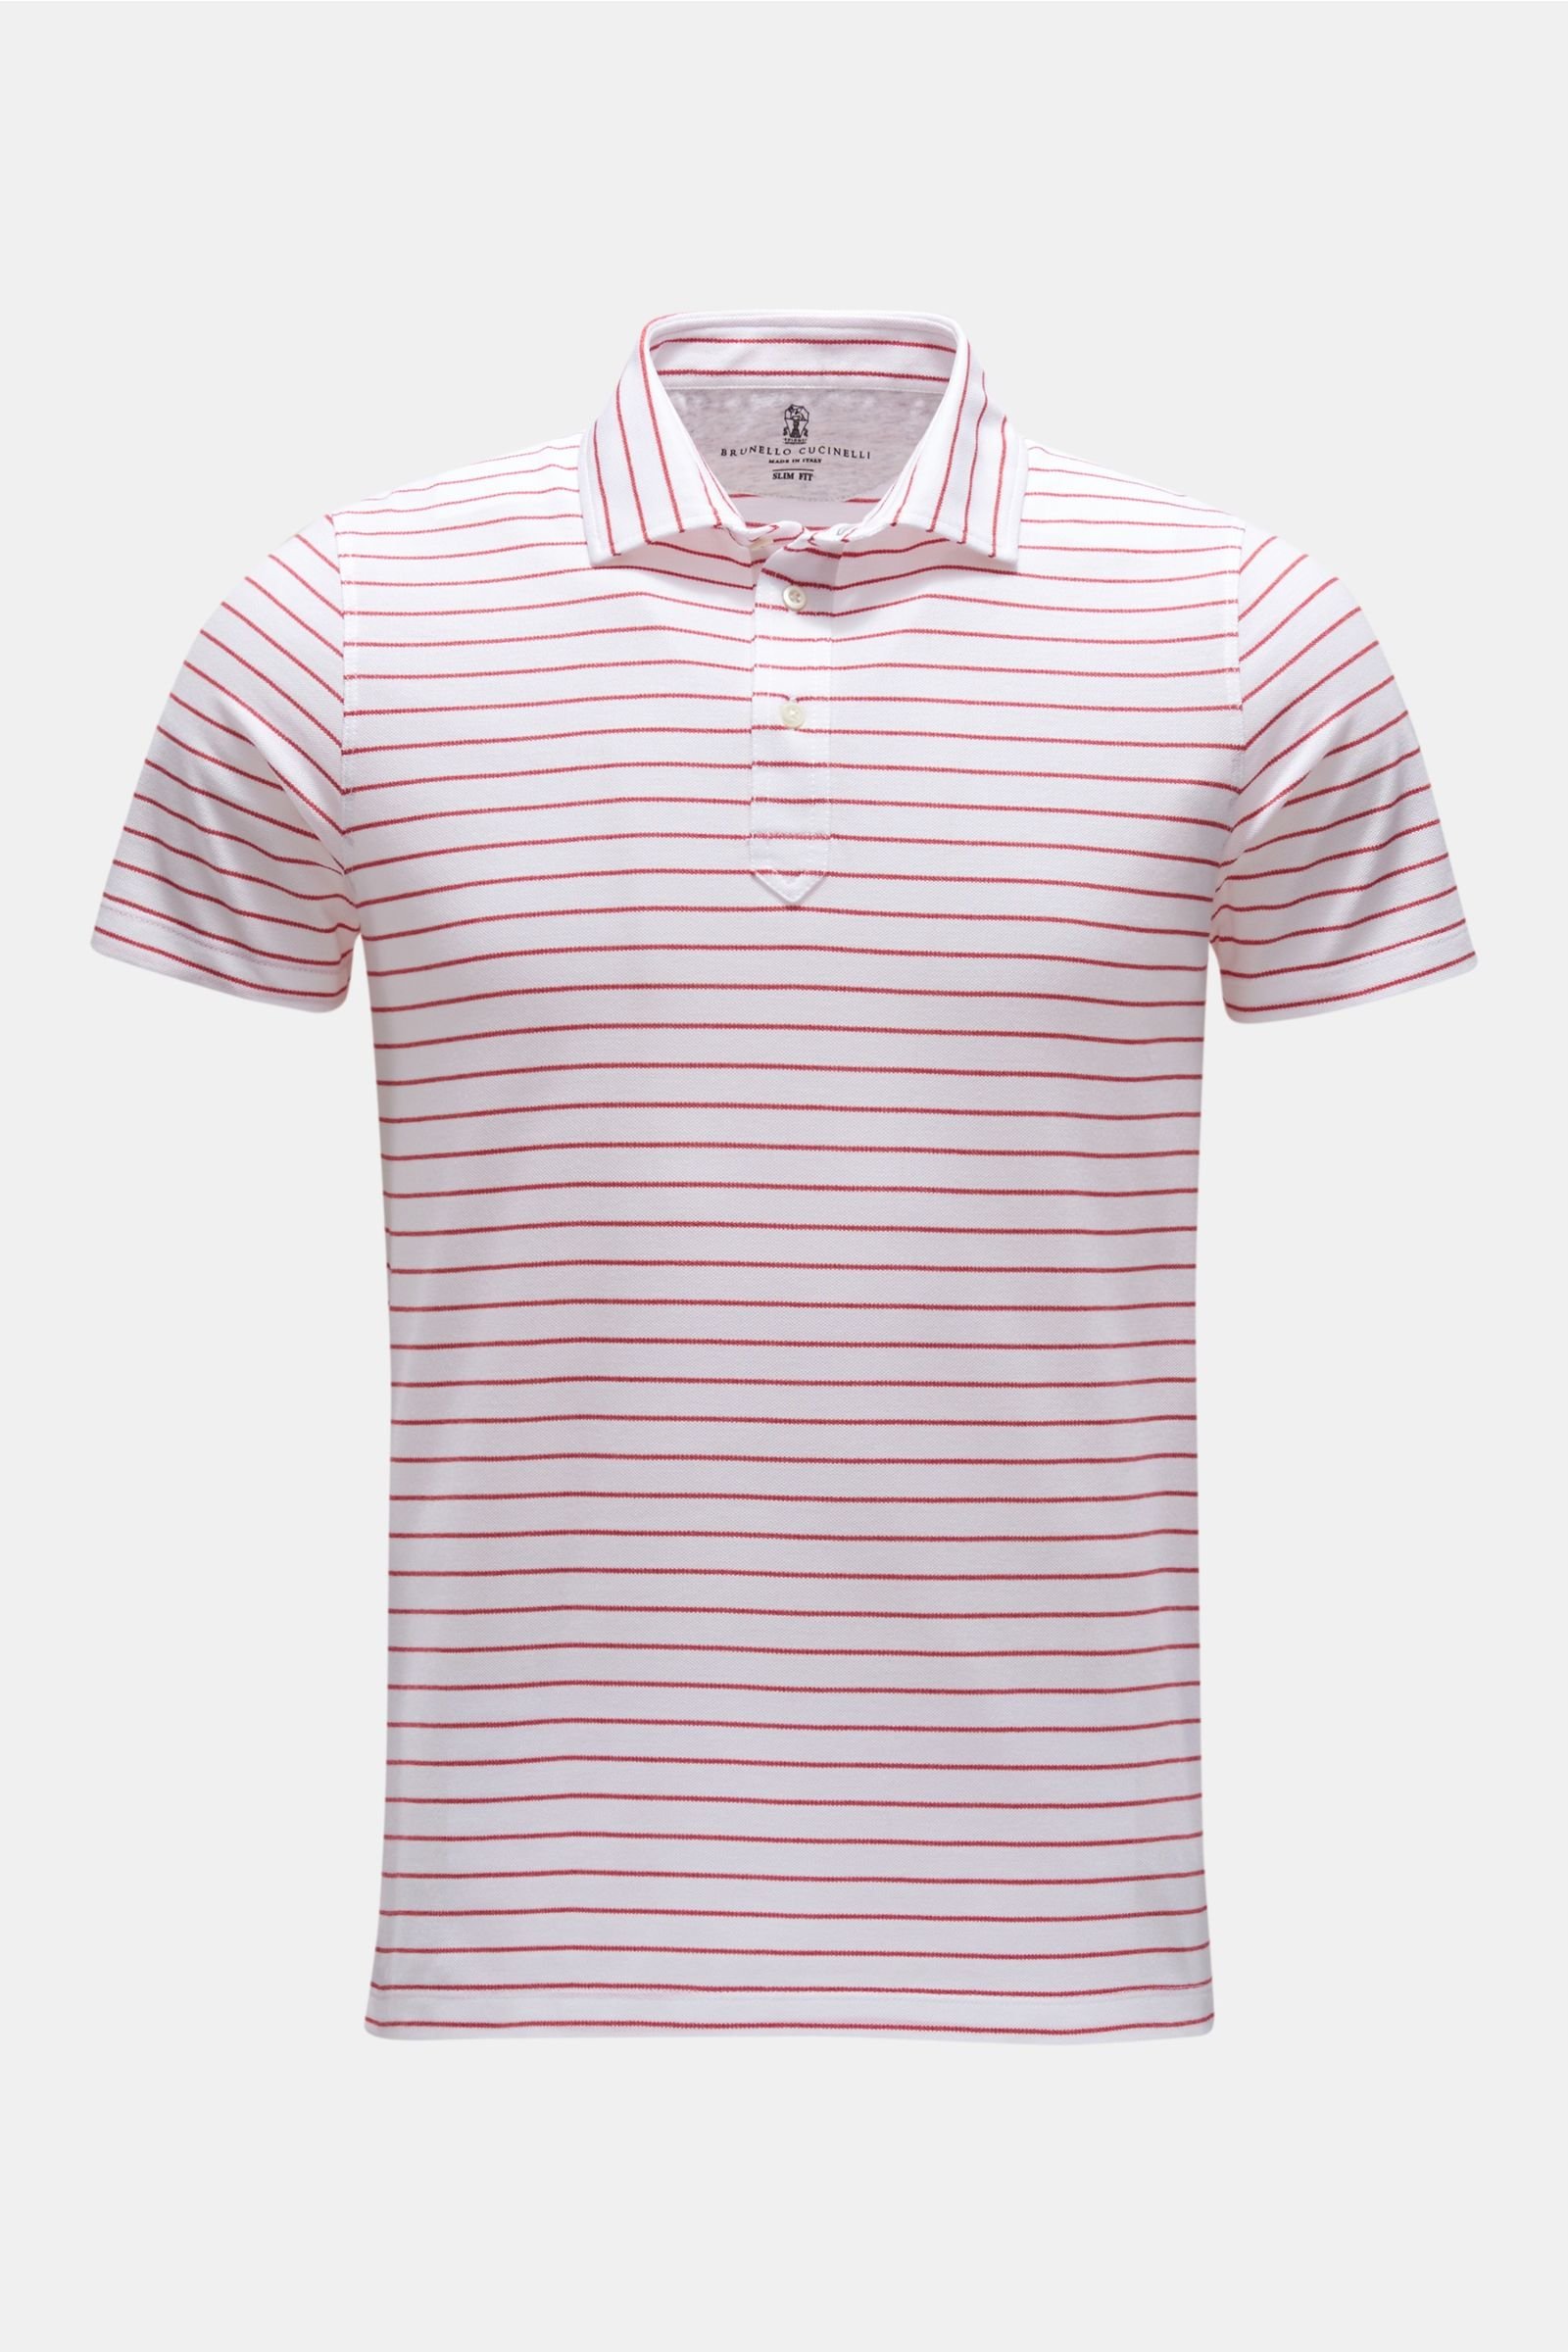 Polo shirt red/white striped